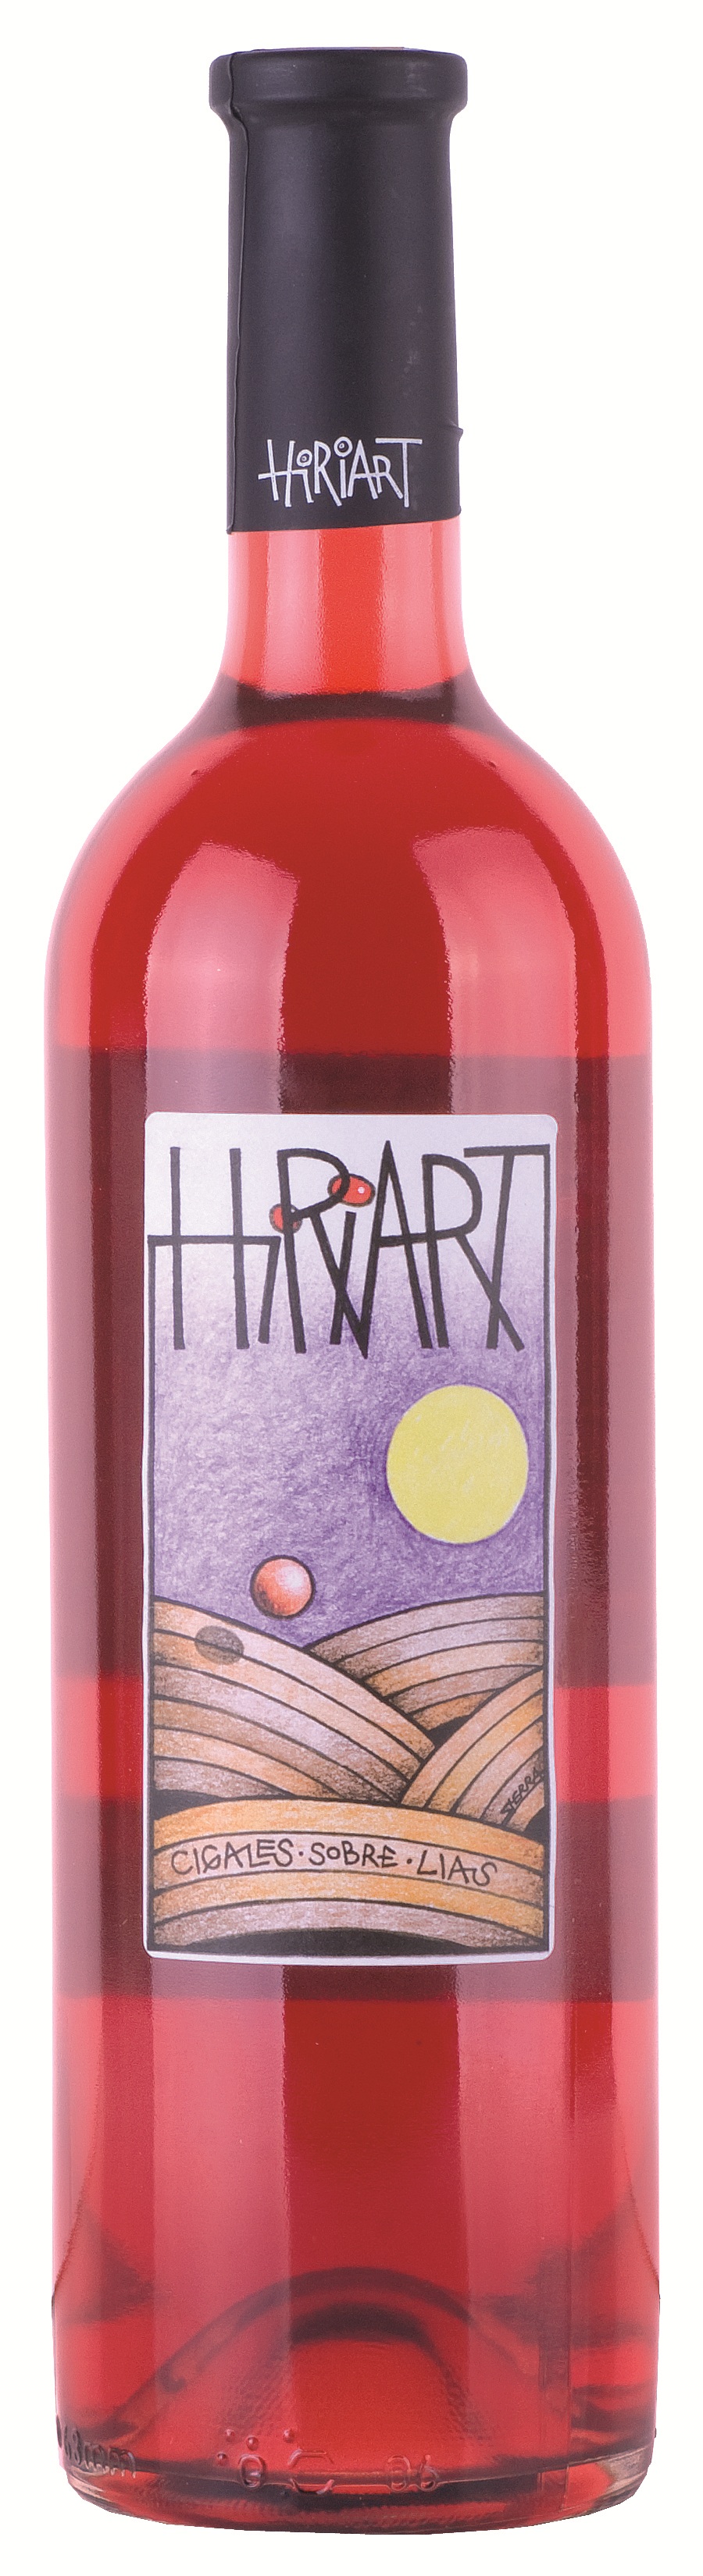 Logo del vino Hiriart Rosado Fermentado en Barrica